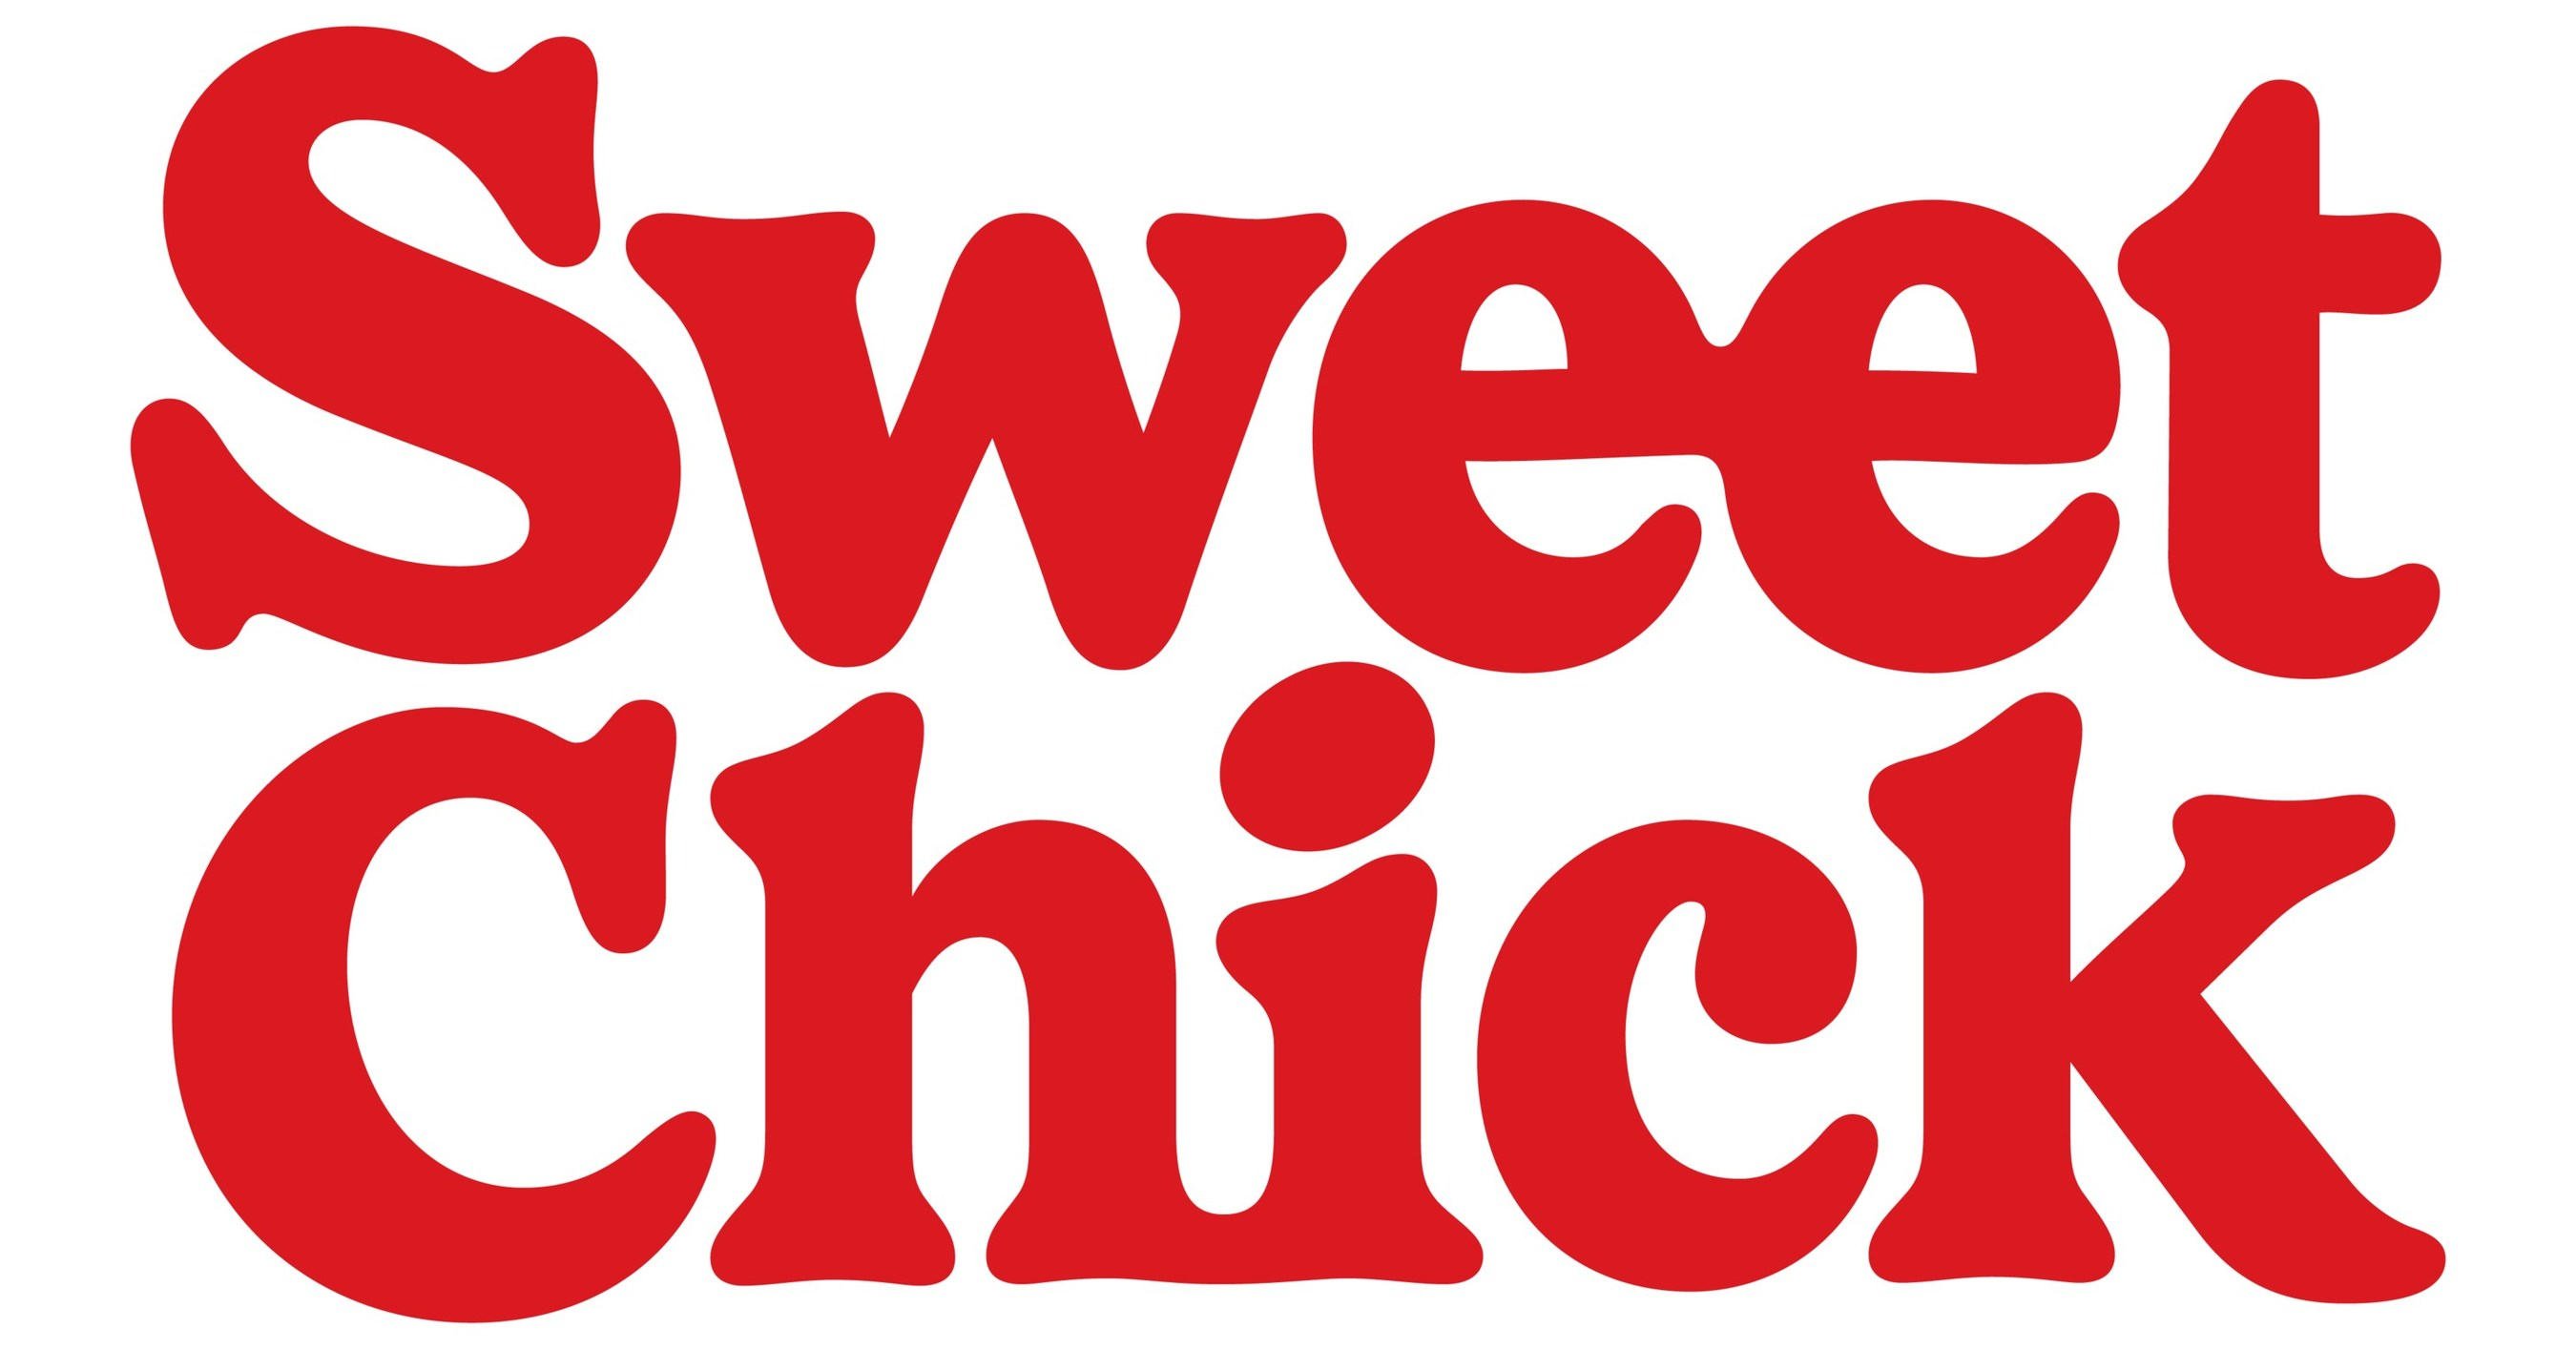 Sweet Chick logo